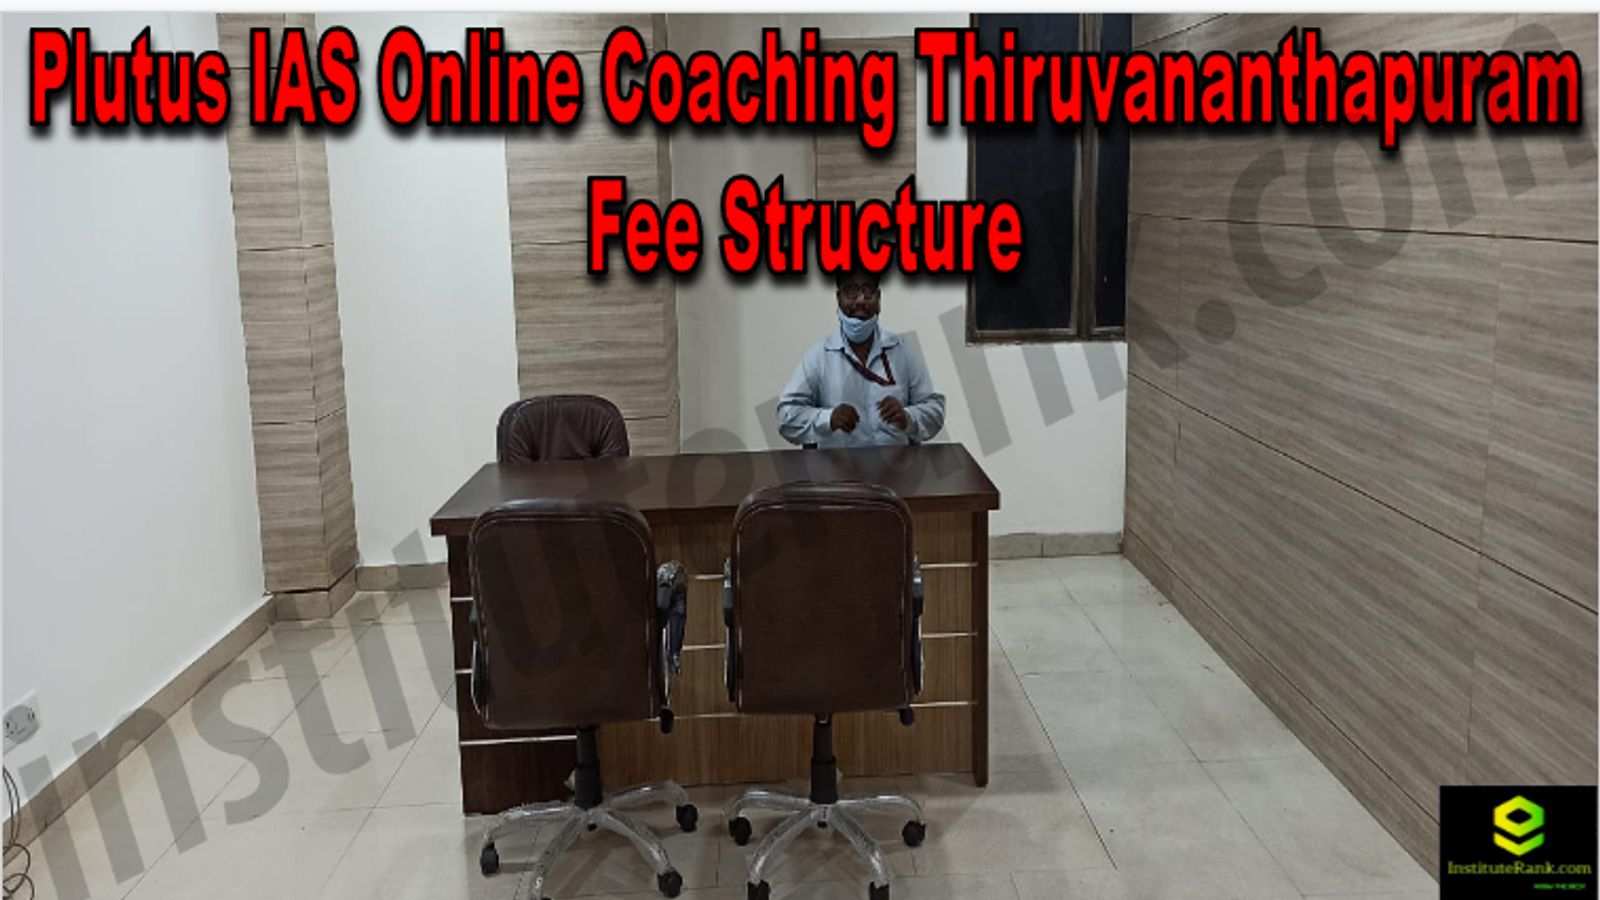 Plutus IAS Online Coaching Thiruvananthapuram Fee Structure